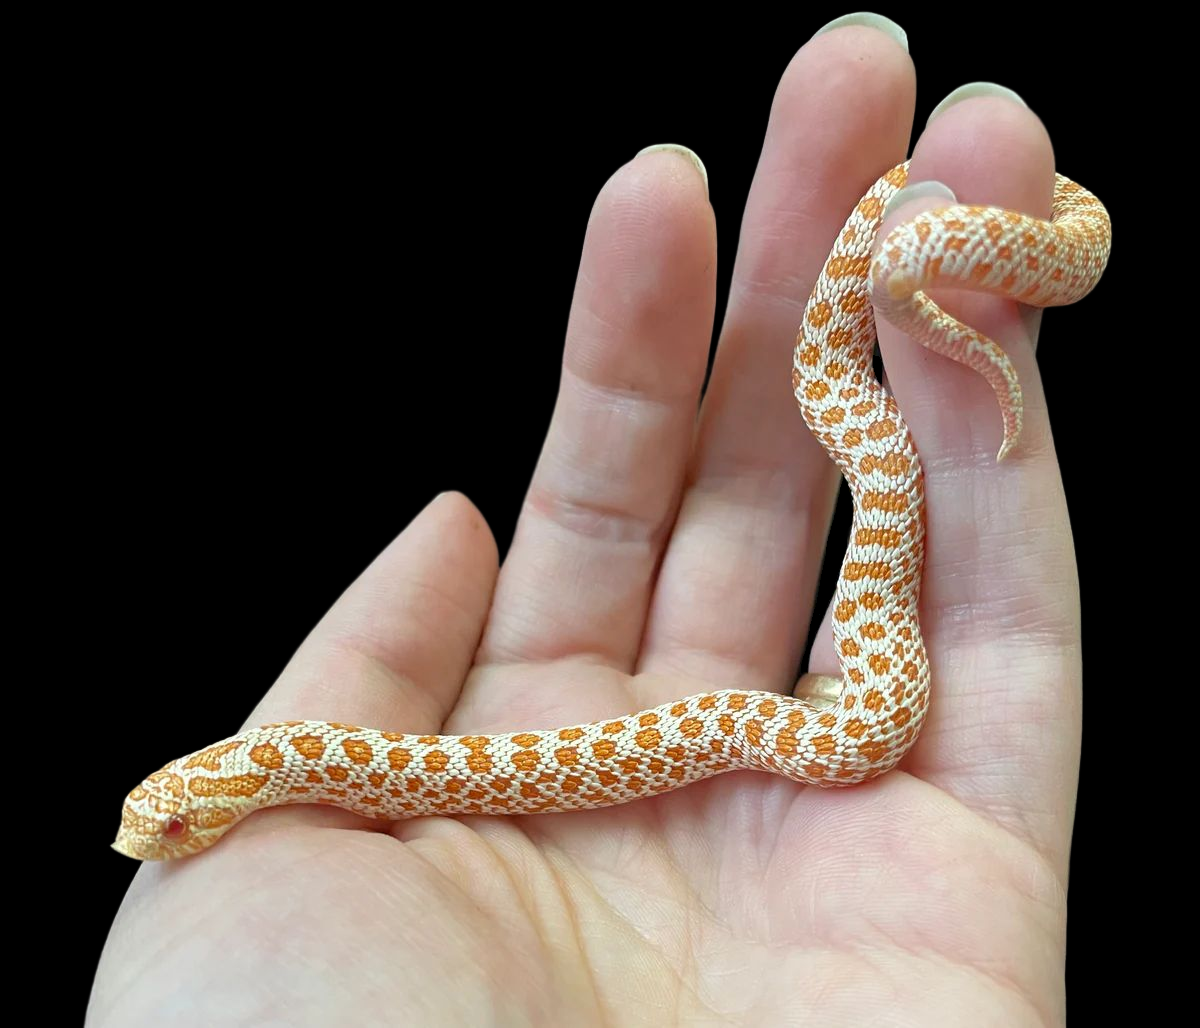 Western Hognose Snake (Albino Arctic) CBB